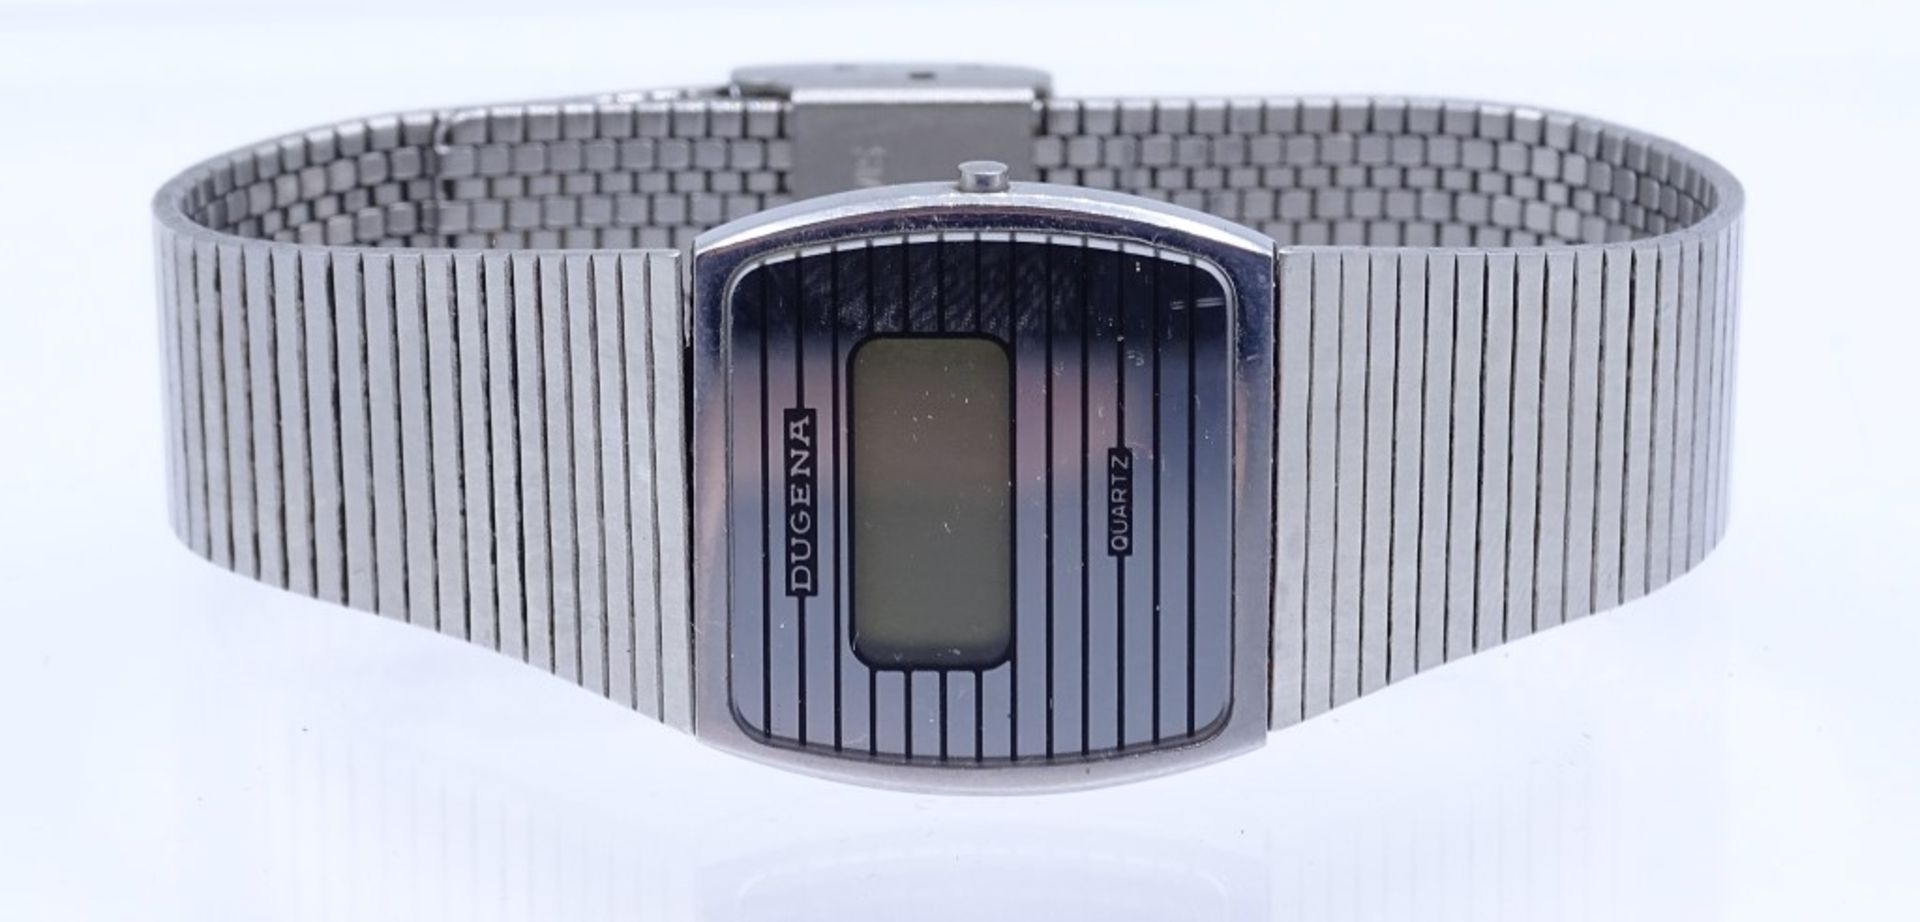 Armbanduhr "Dugena";Quartz,Edelstahl,Gehäuse 25x23mm, Funktion nicht überprüft - Bild 3 aus 5